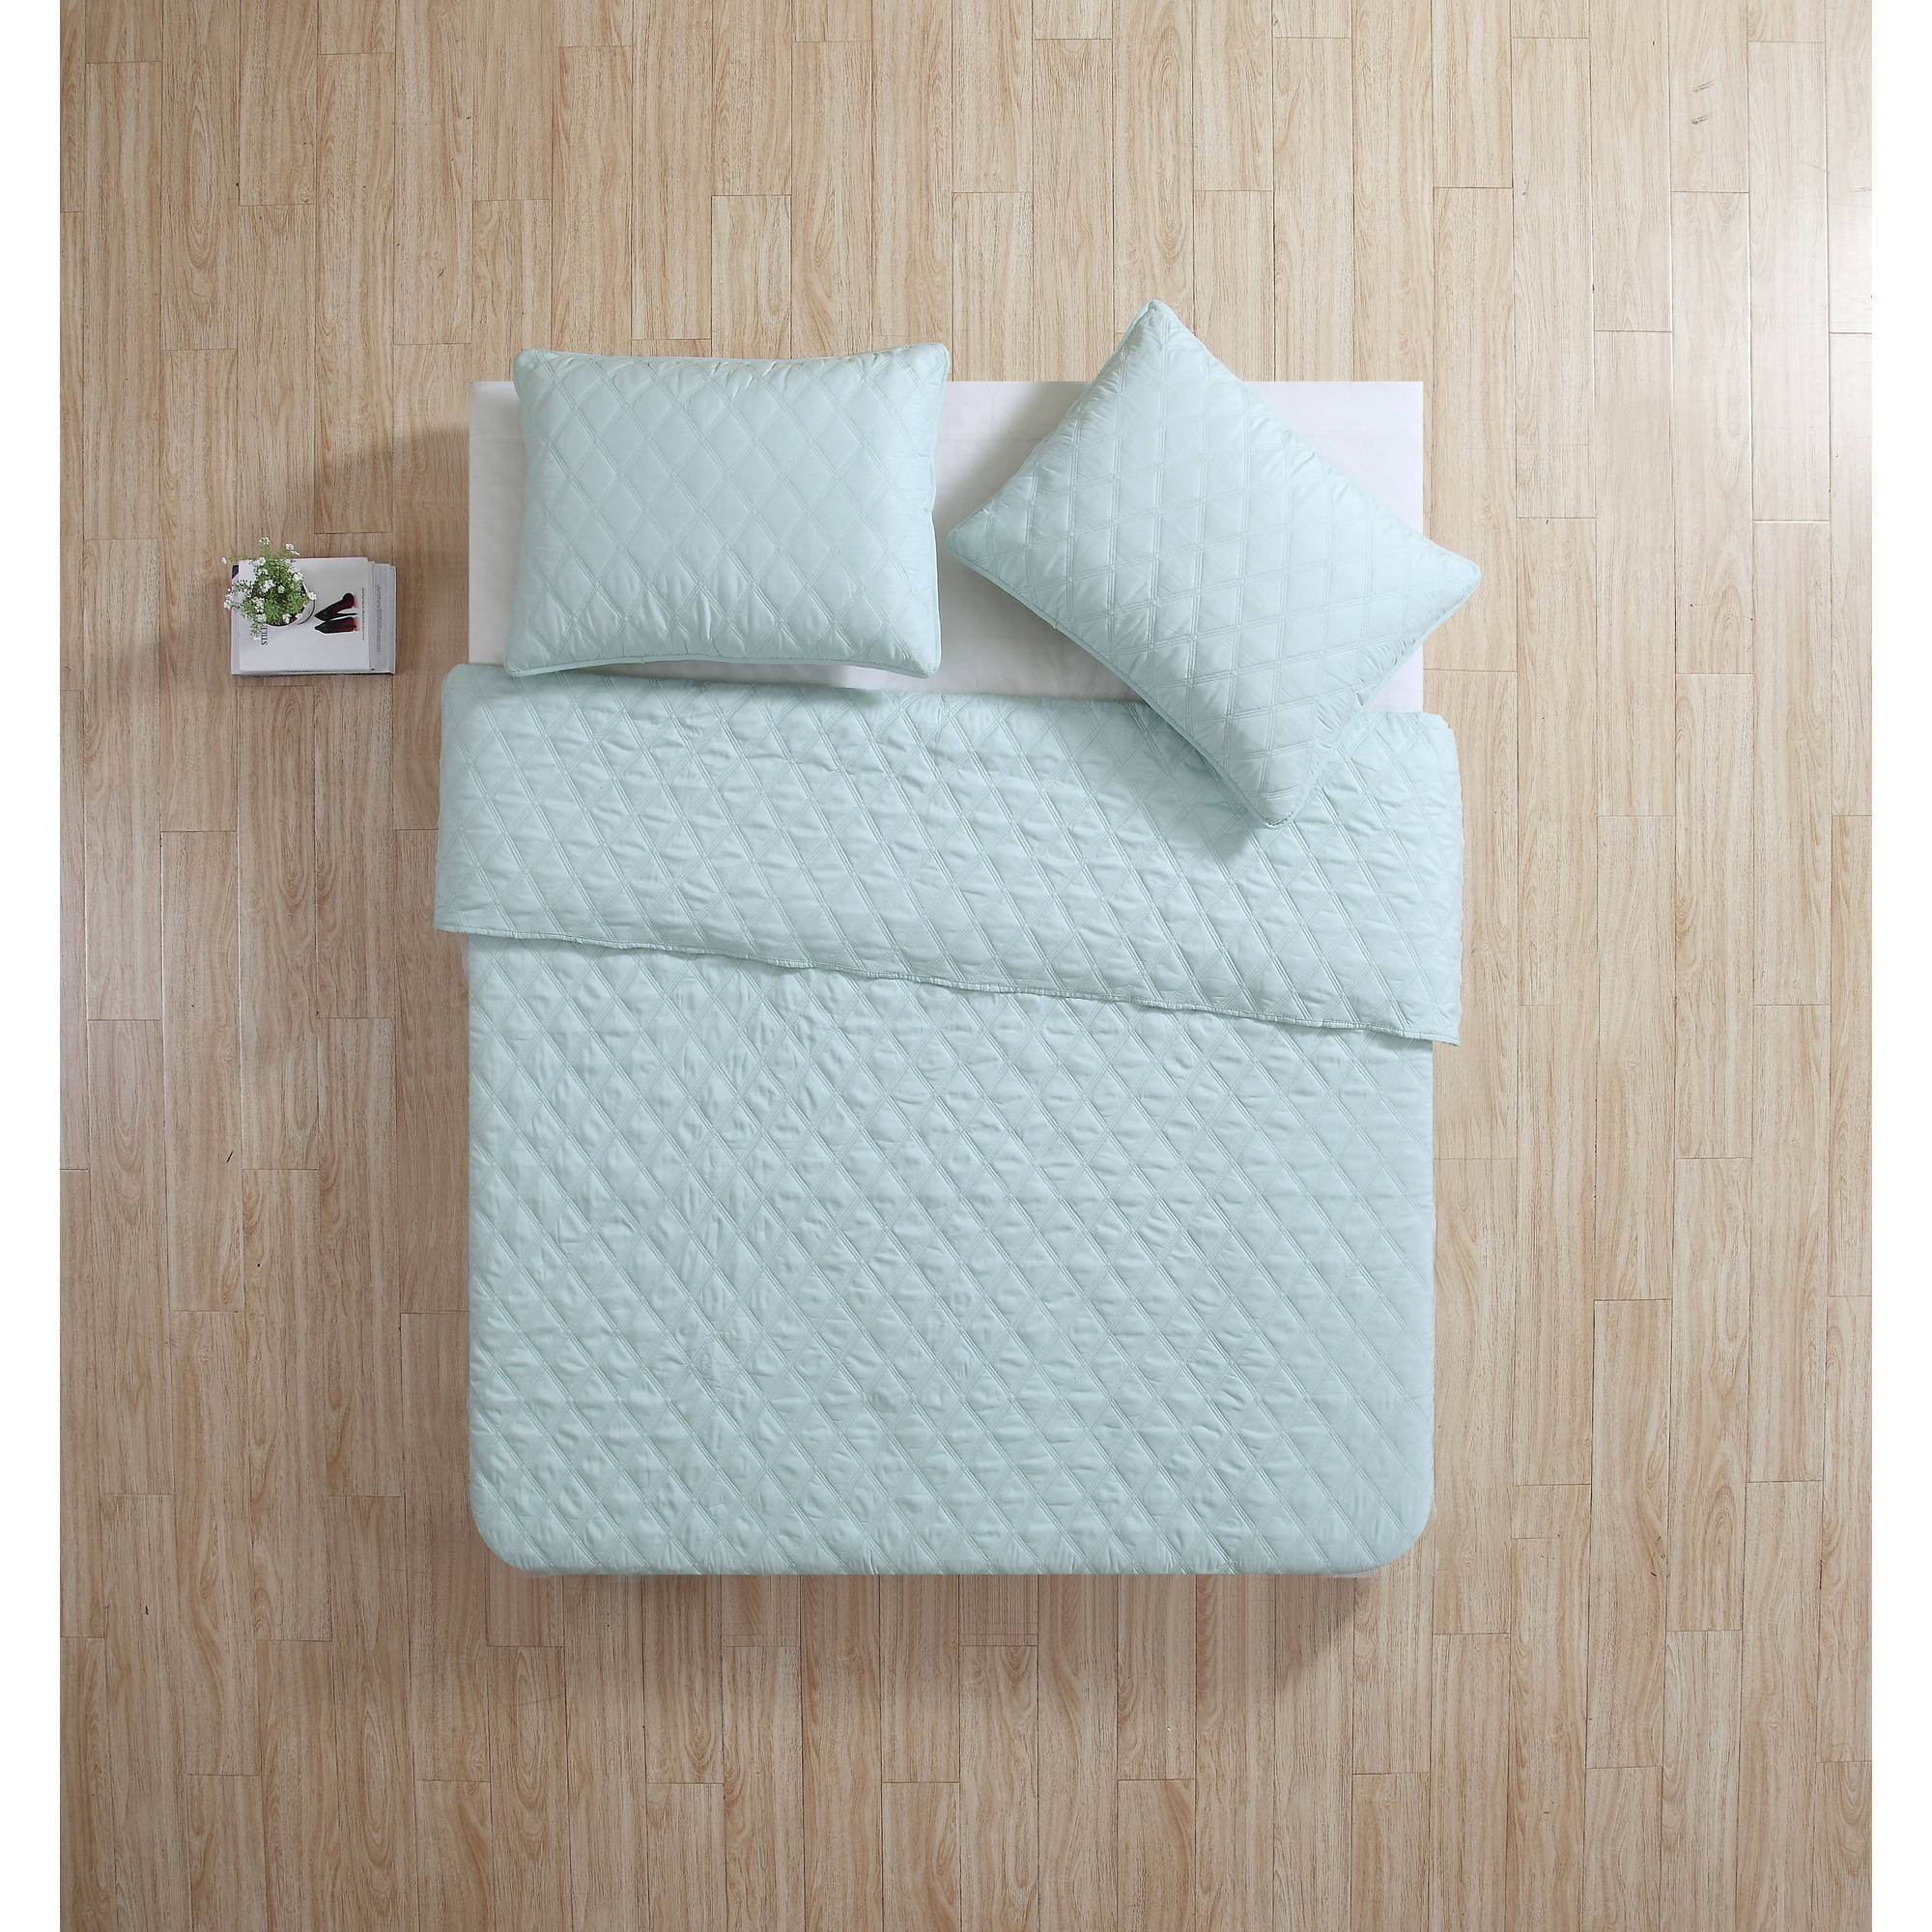 King VCNY Home Buckingham Coverlet with 2 Pillow Shams Set Aqua